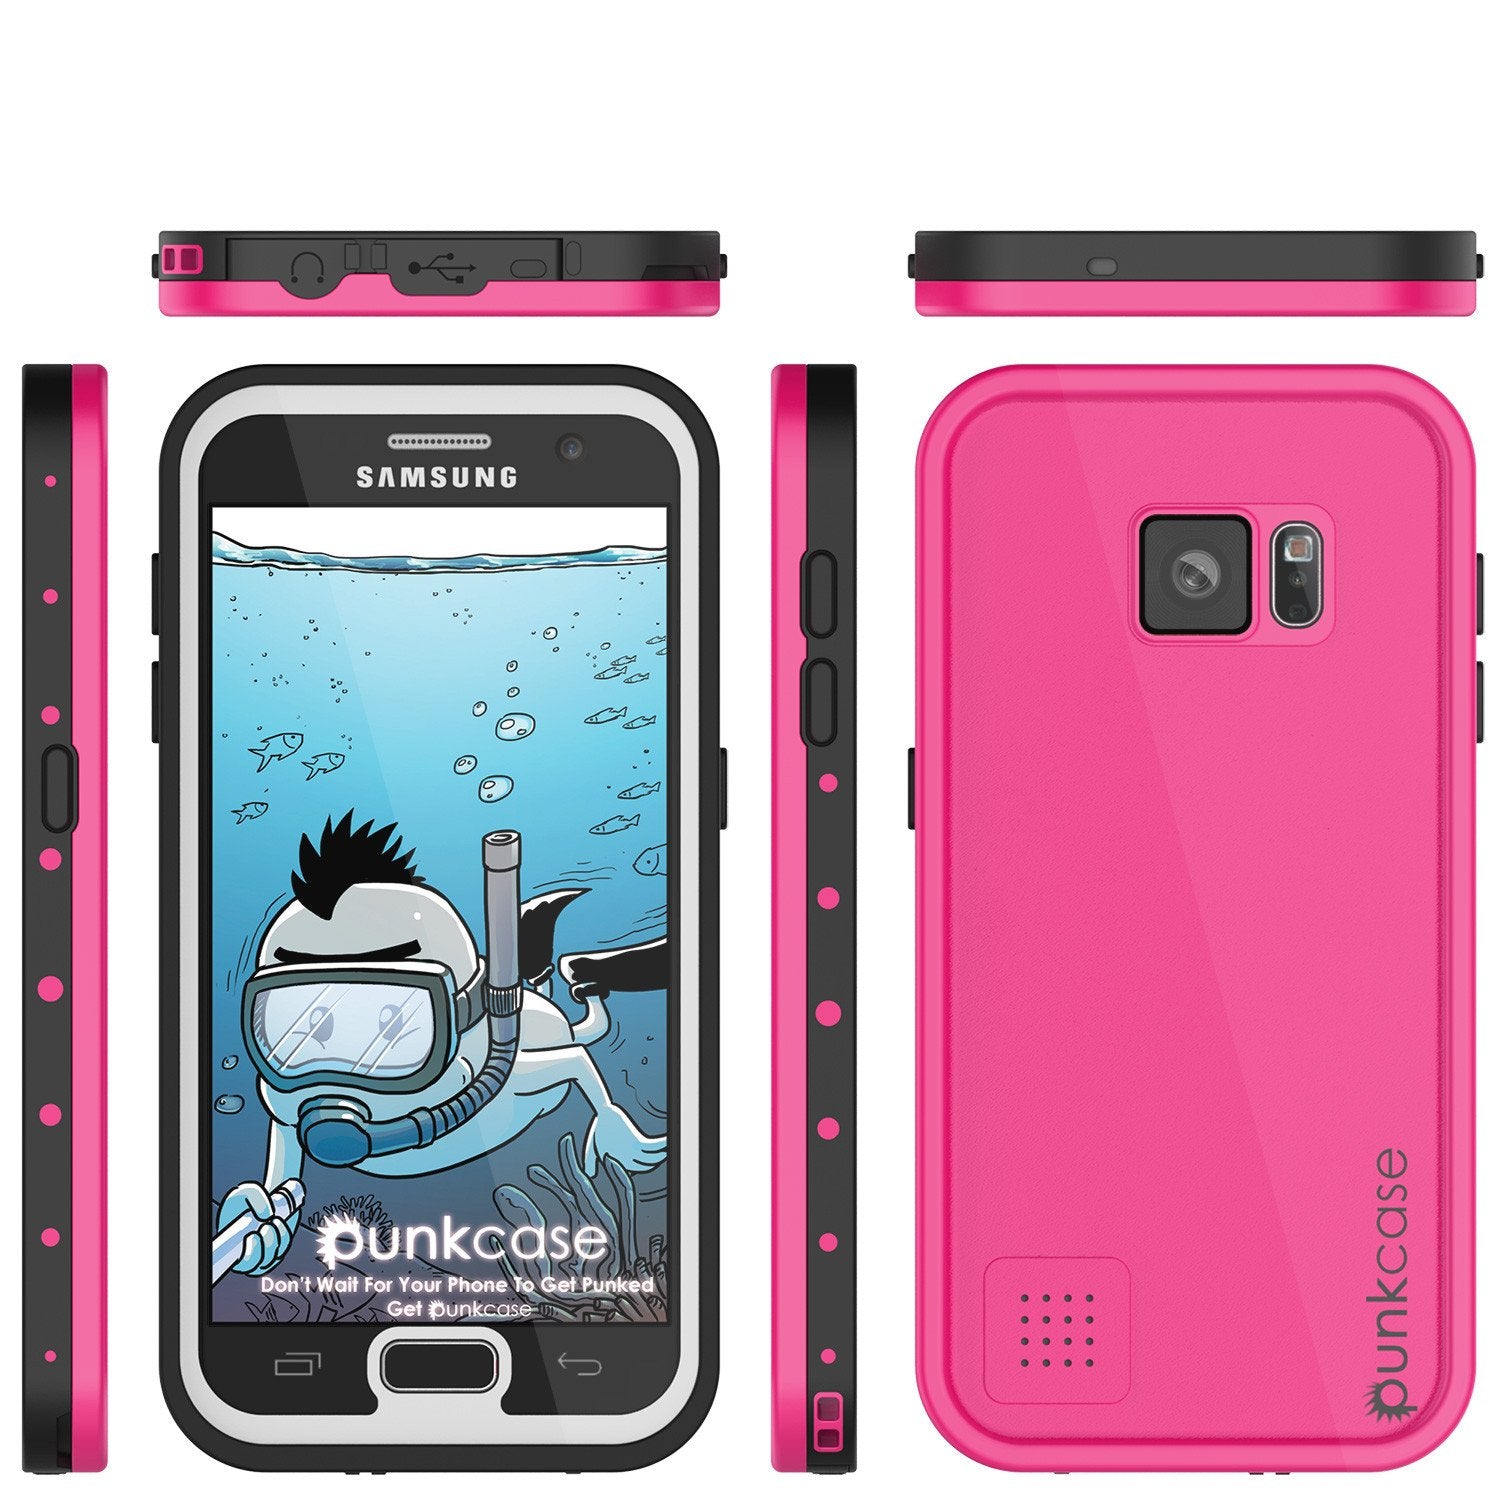 Galaxy S7 Waterproof Case PunkCase StudStar Pink Thin 6.6ft Underwater IP68 Shock/Dirt/Snow Proof